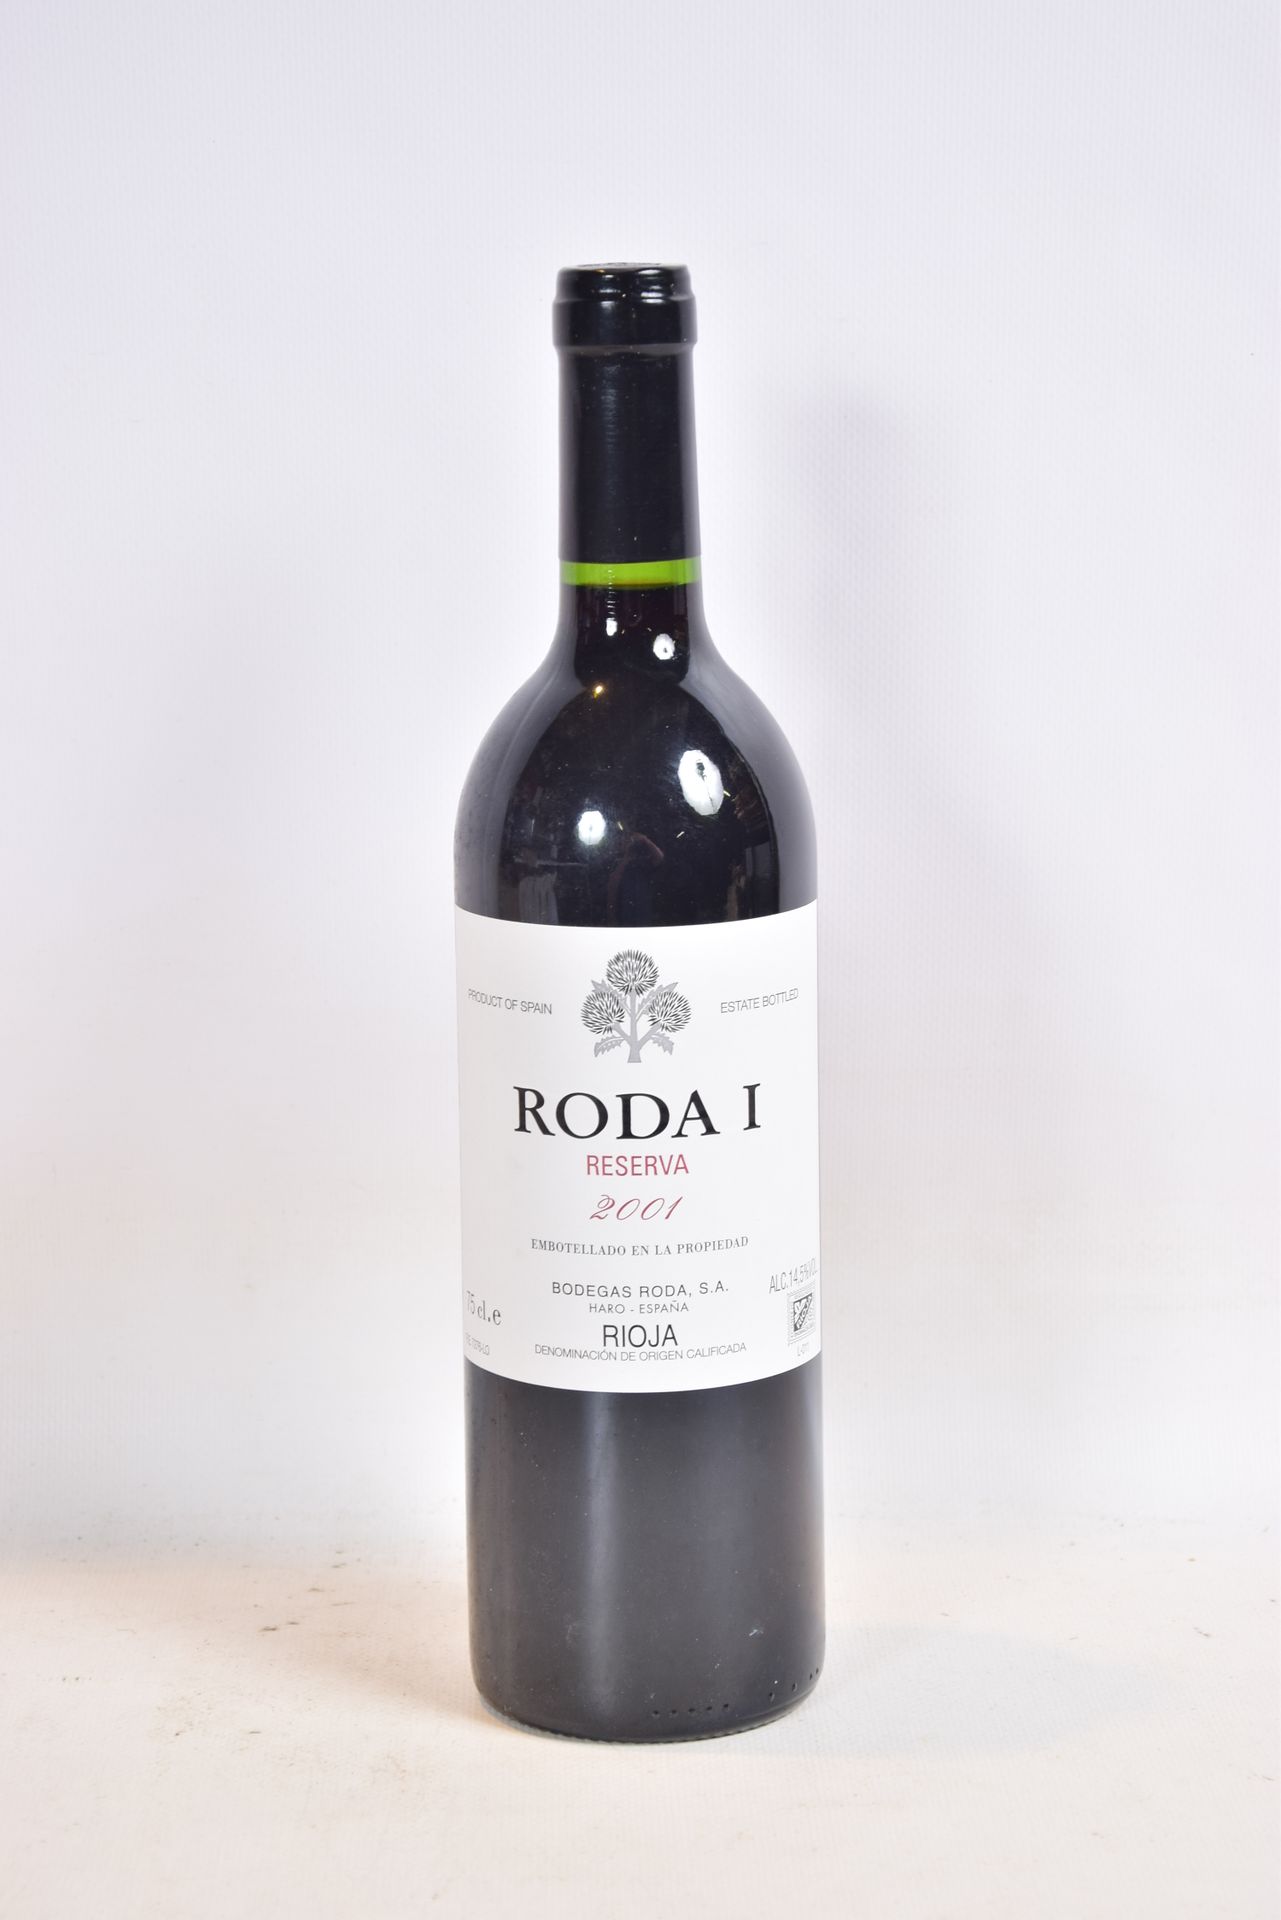 Null 1 Blle Rioja RODA 1 Reserva mise Bodegas Roda（西班牙） 2001年

	介绍和水平，无可挑剔。丝绸纸。